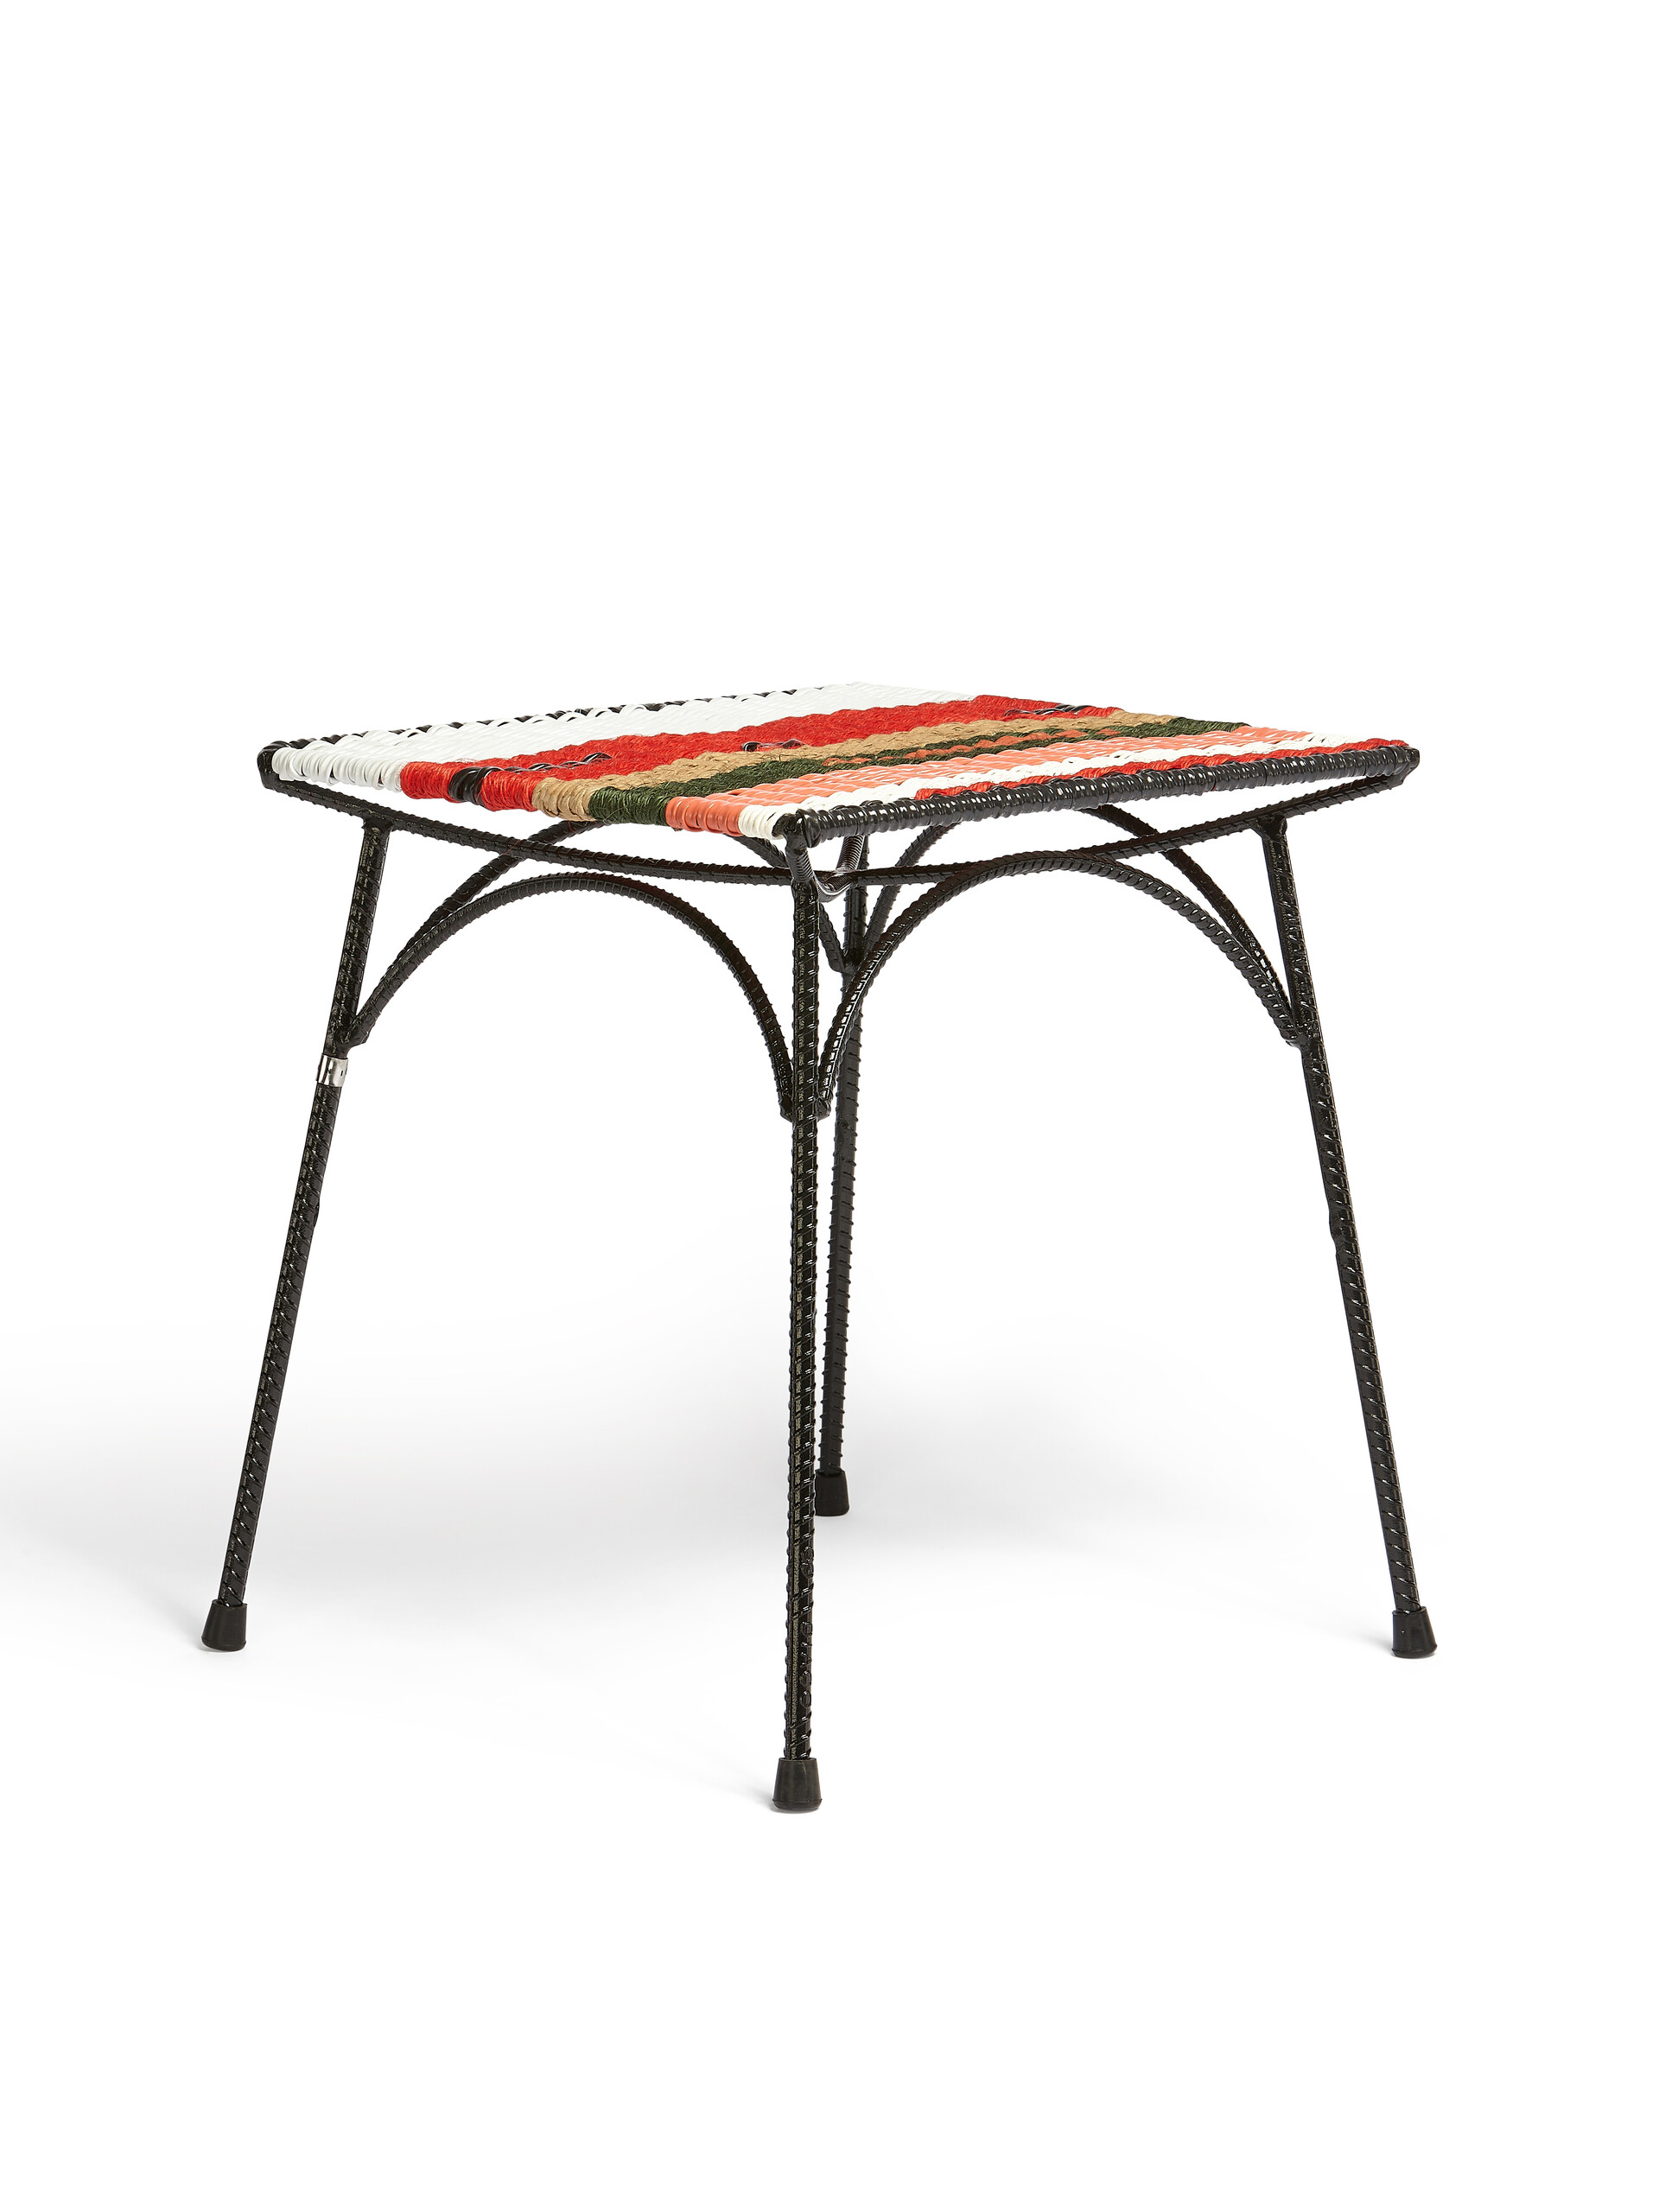 MARNI MARKET stool-table in iron multicolour red PVC - Furniture - Image 2